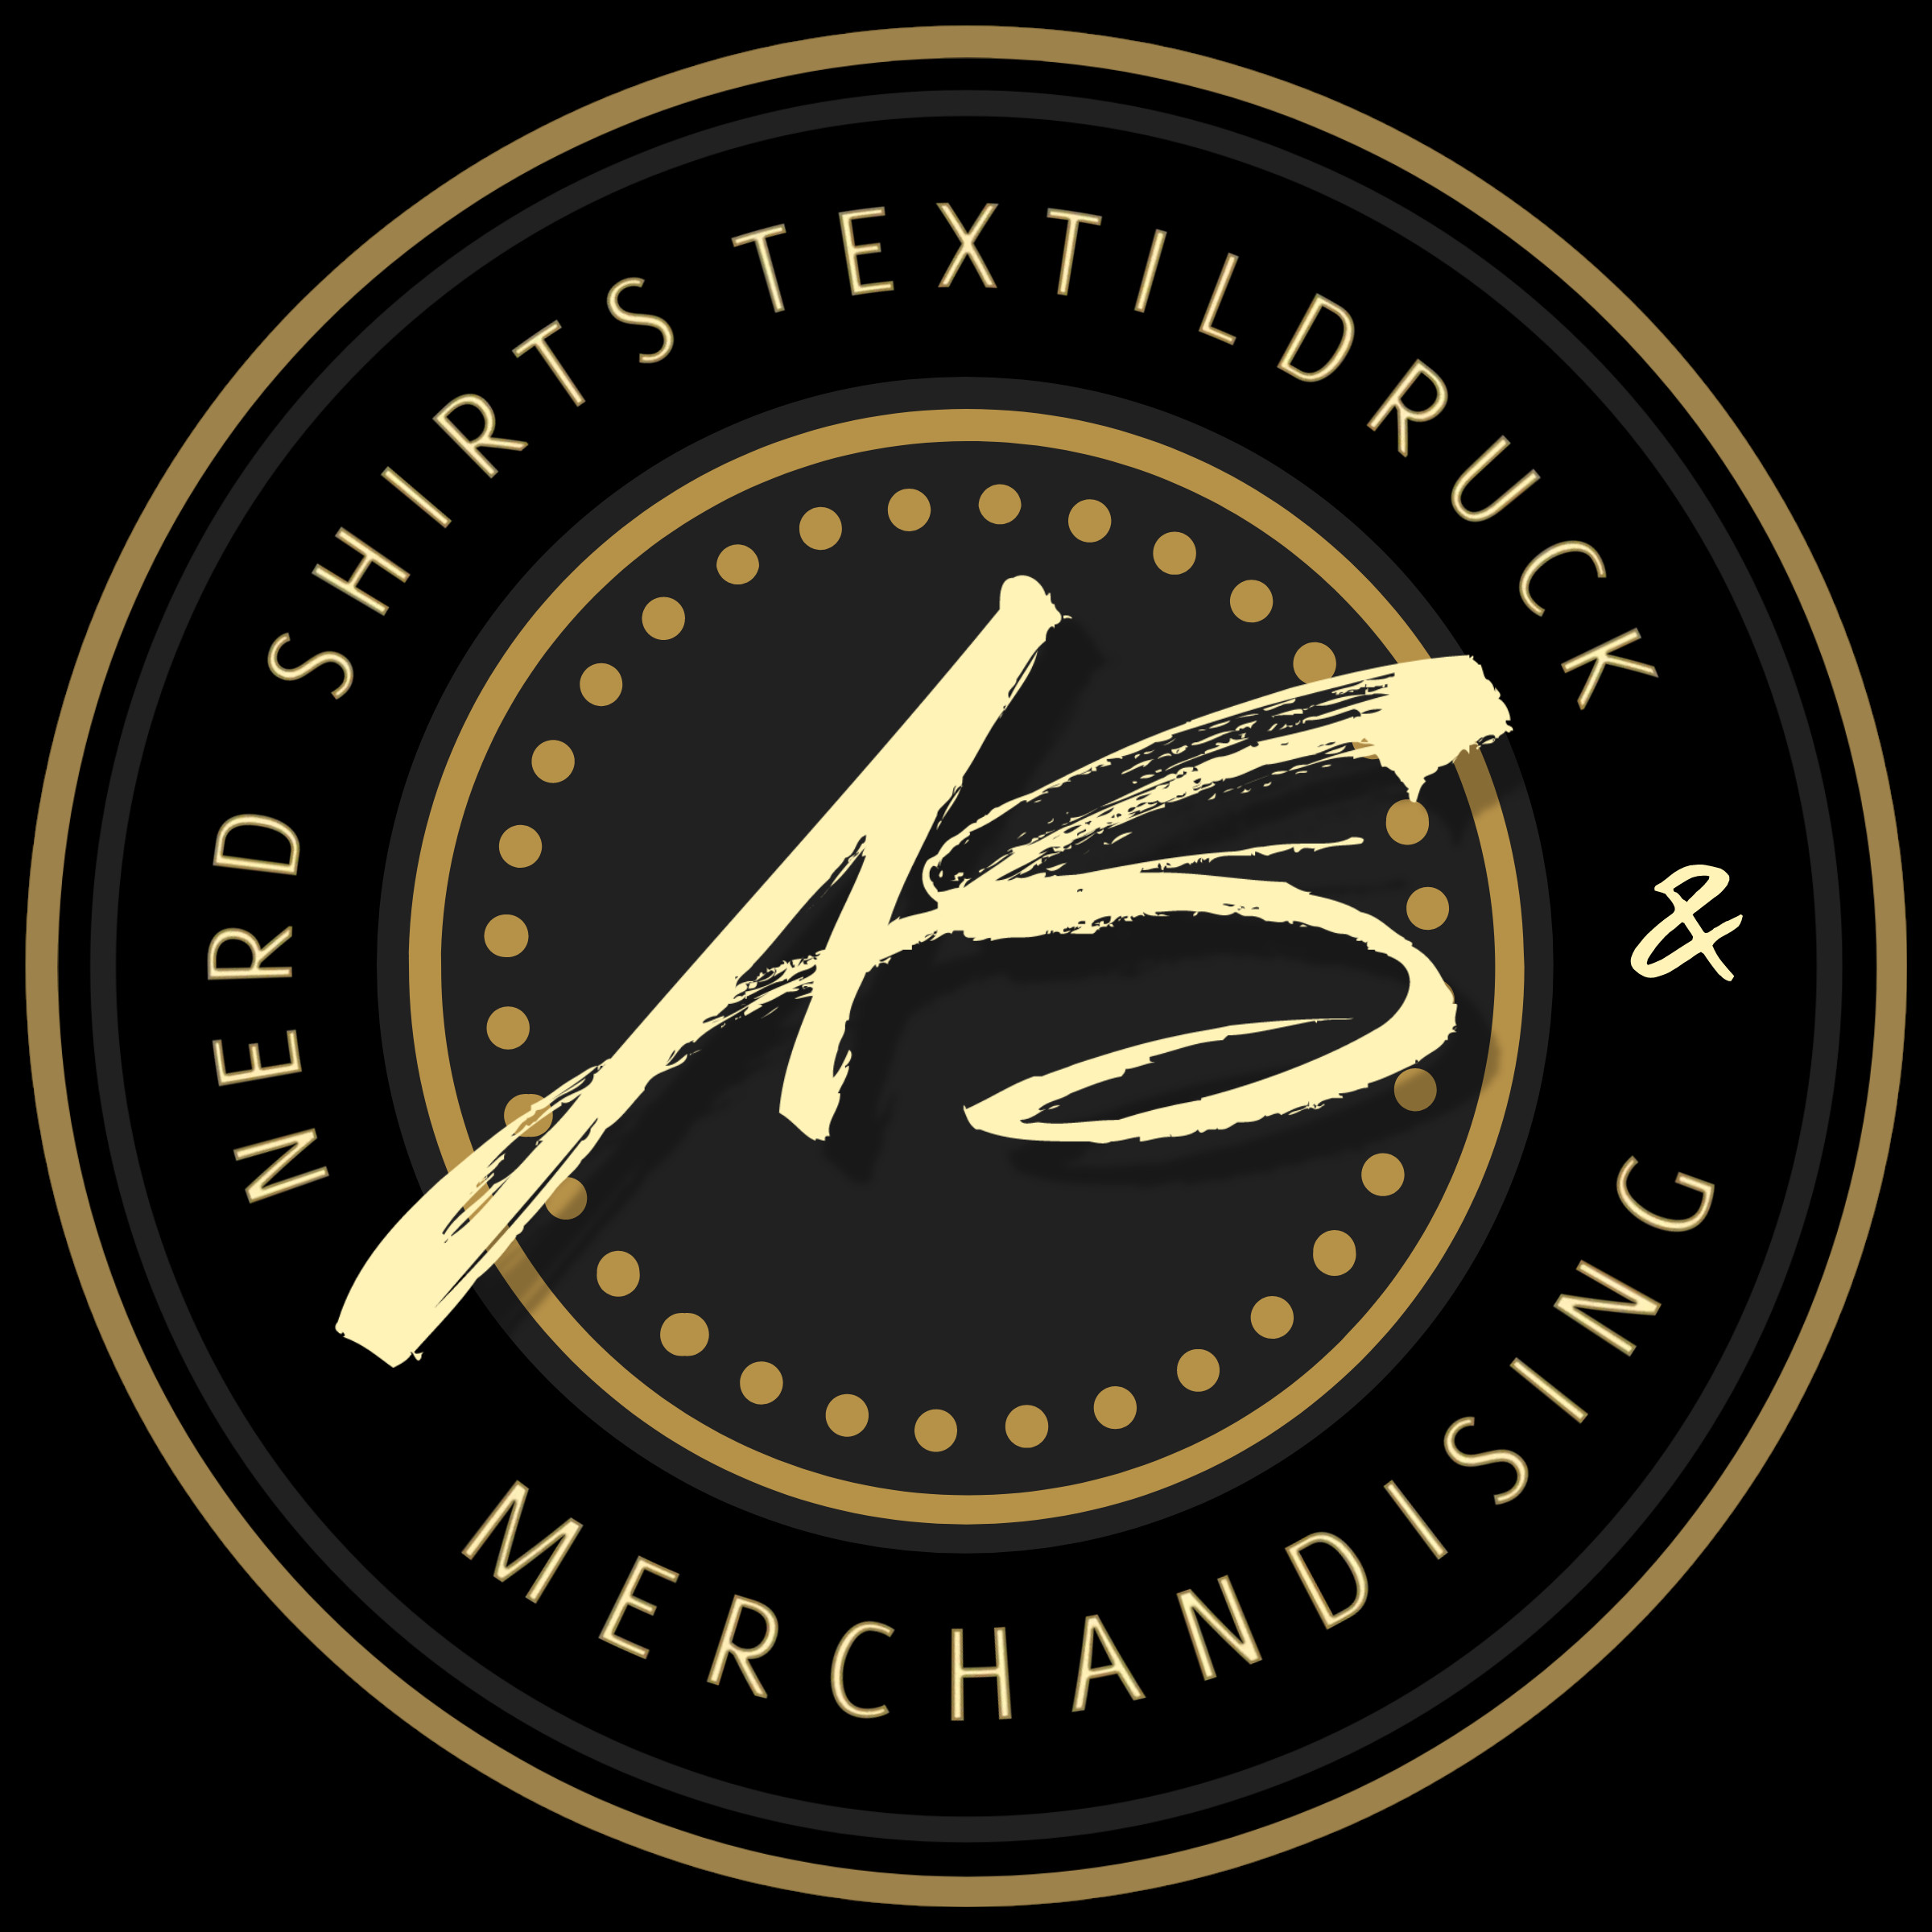 Nerd Shirts Textildruck - Logo